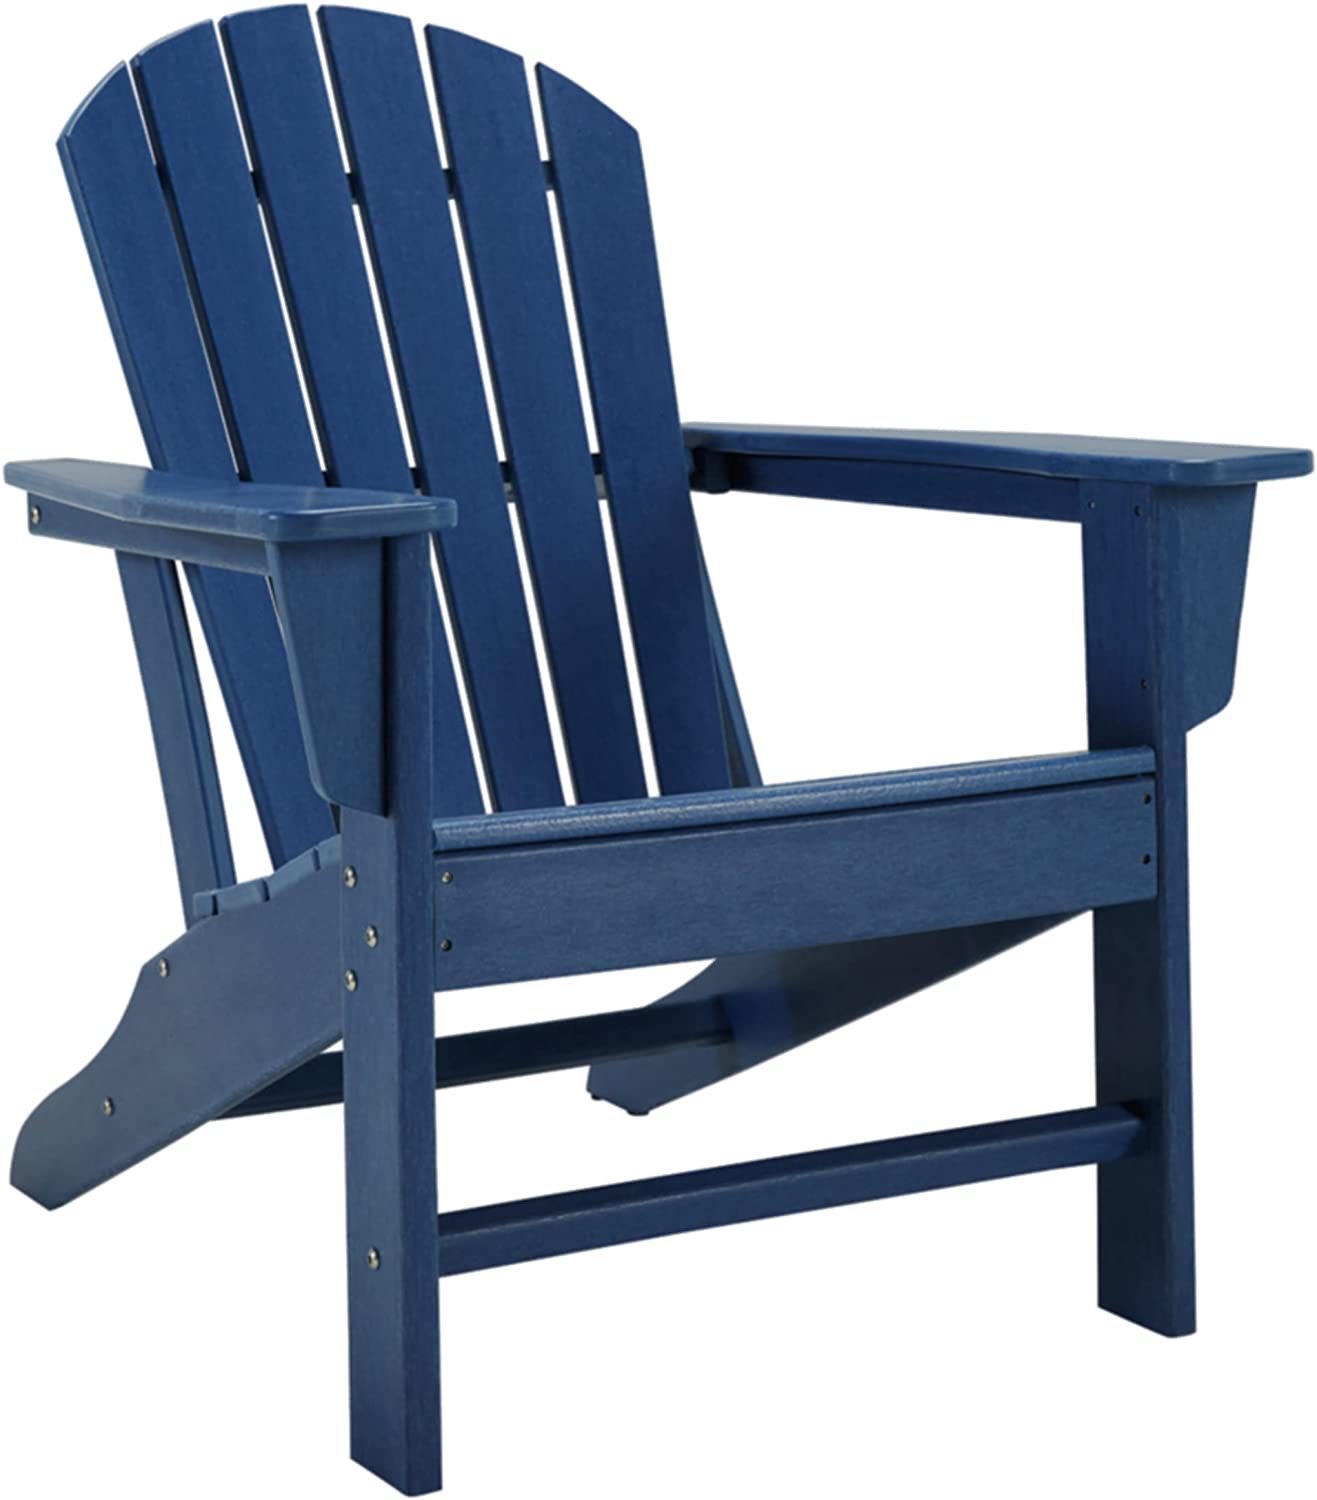 Blue Sundown Treasure Hdpe Patio Adirondack Chair From Signature Design By - $233.99